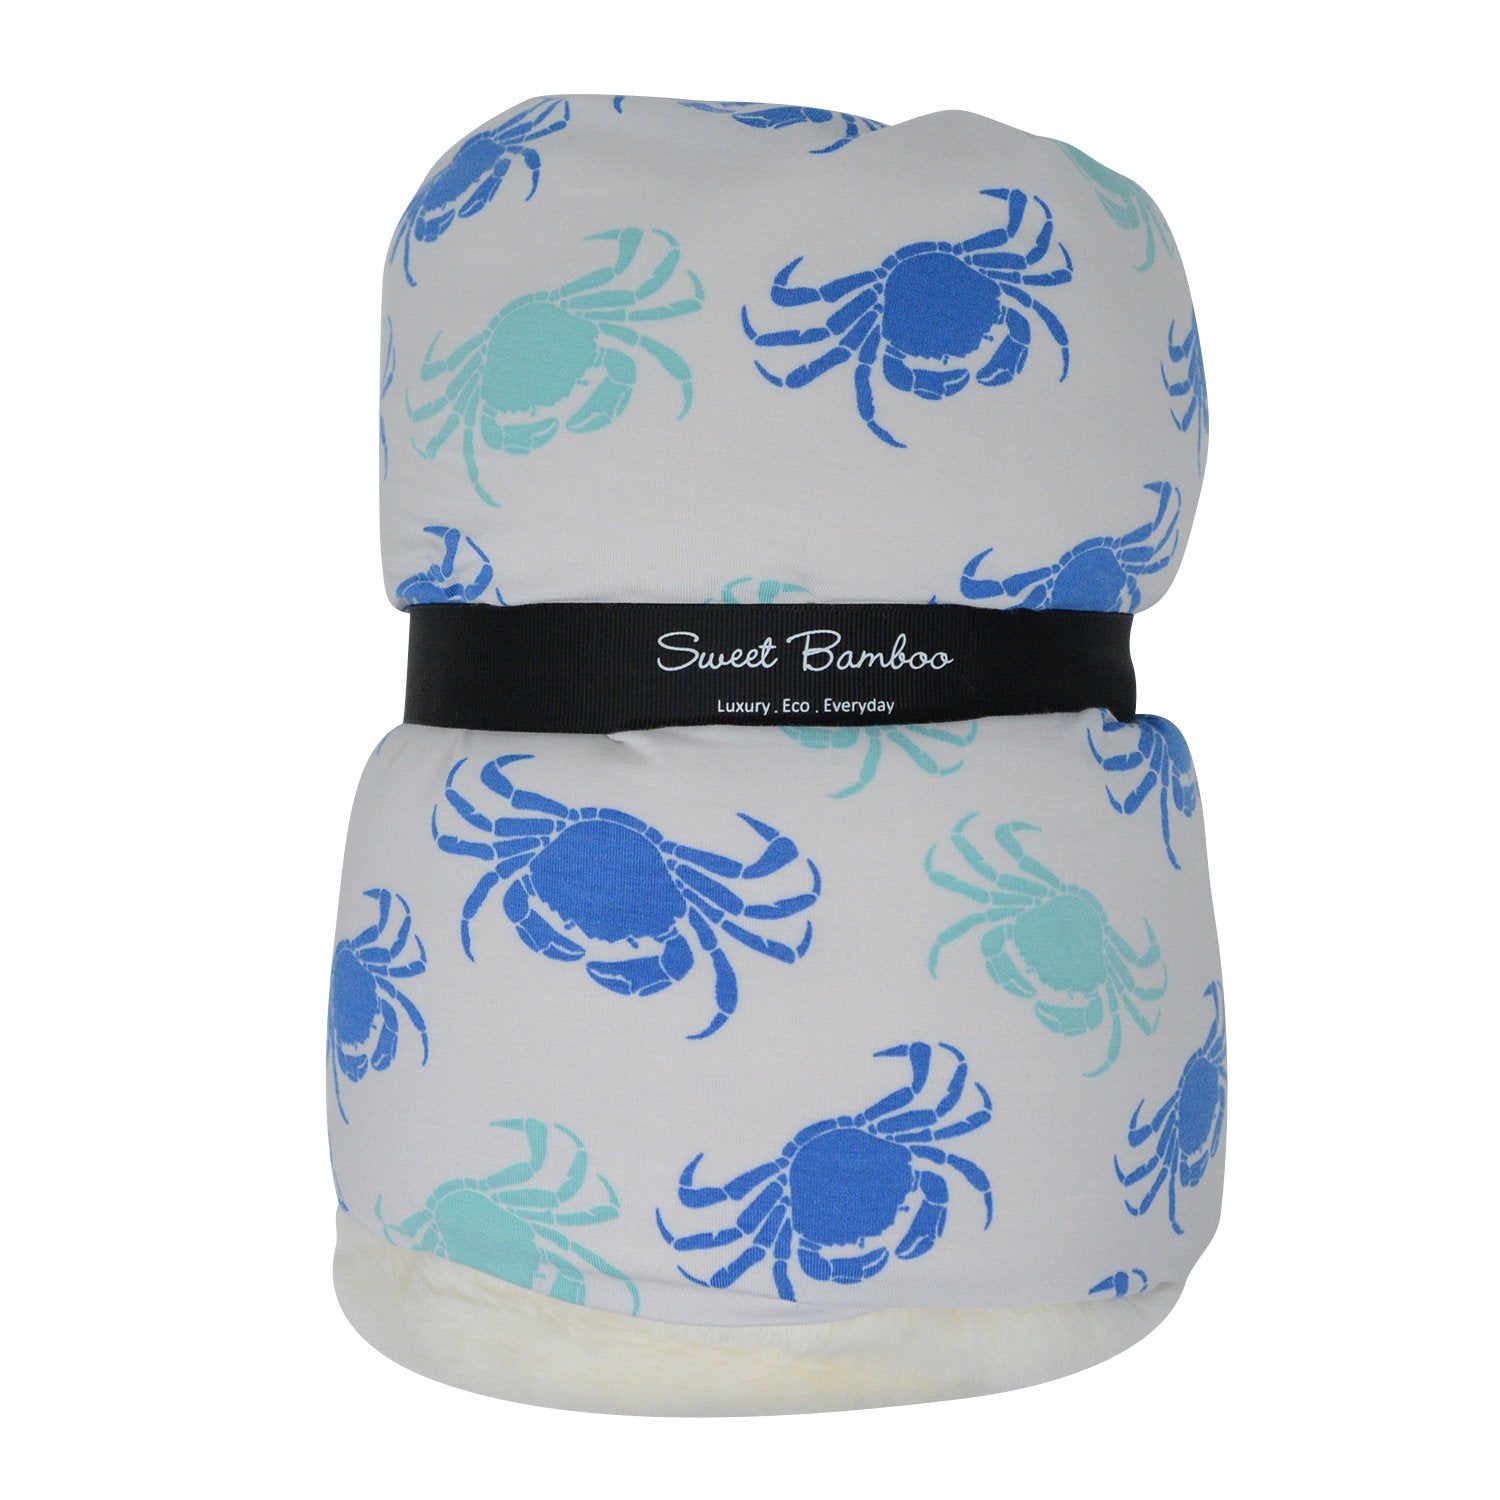 Big Kid Fur Blanket - 60 X 40 - Blue Crabs